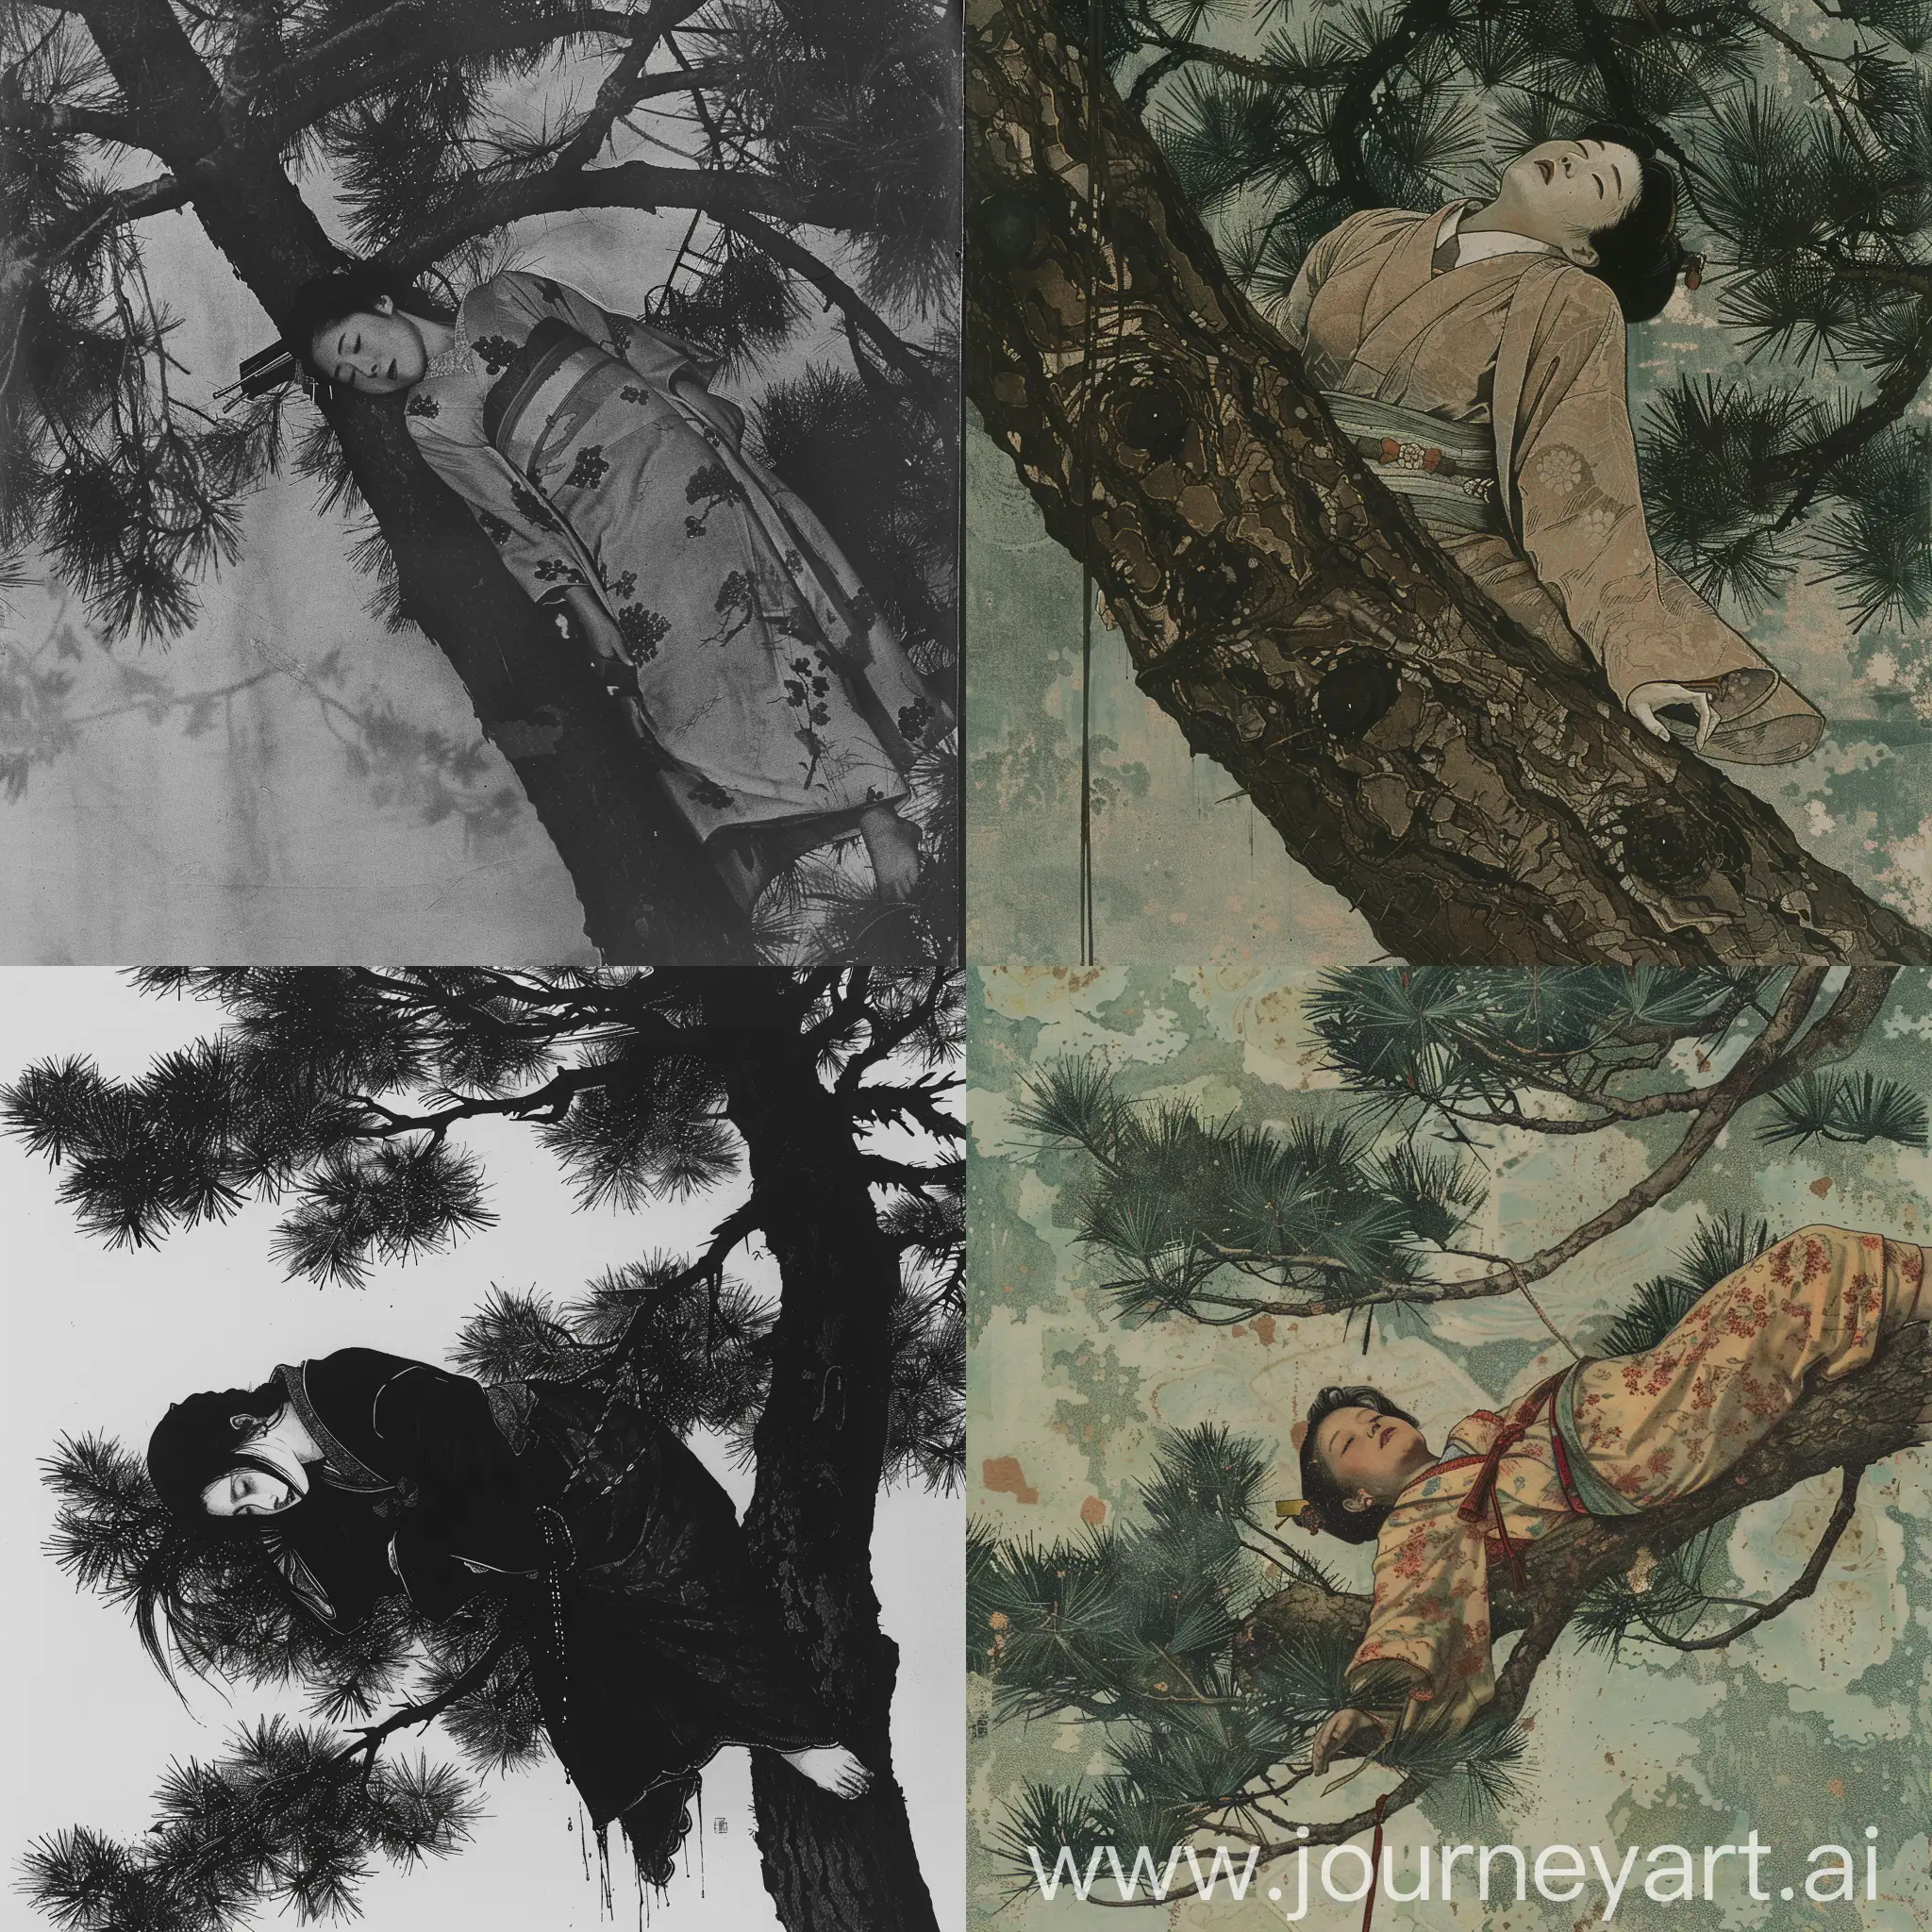 Japanese-Woman-Hanging-on-Pine-Tree-in-Dreamlike-State